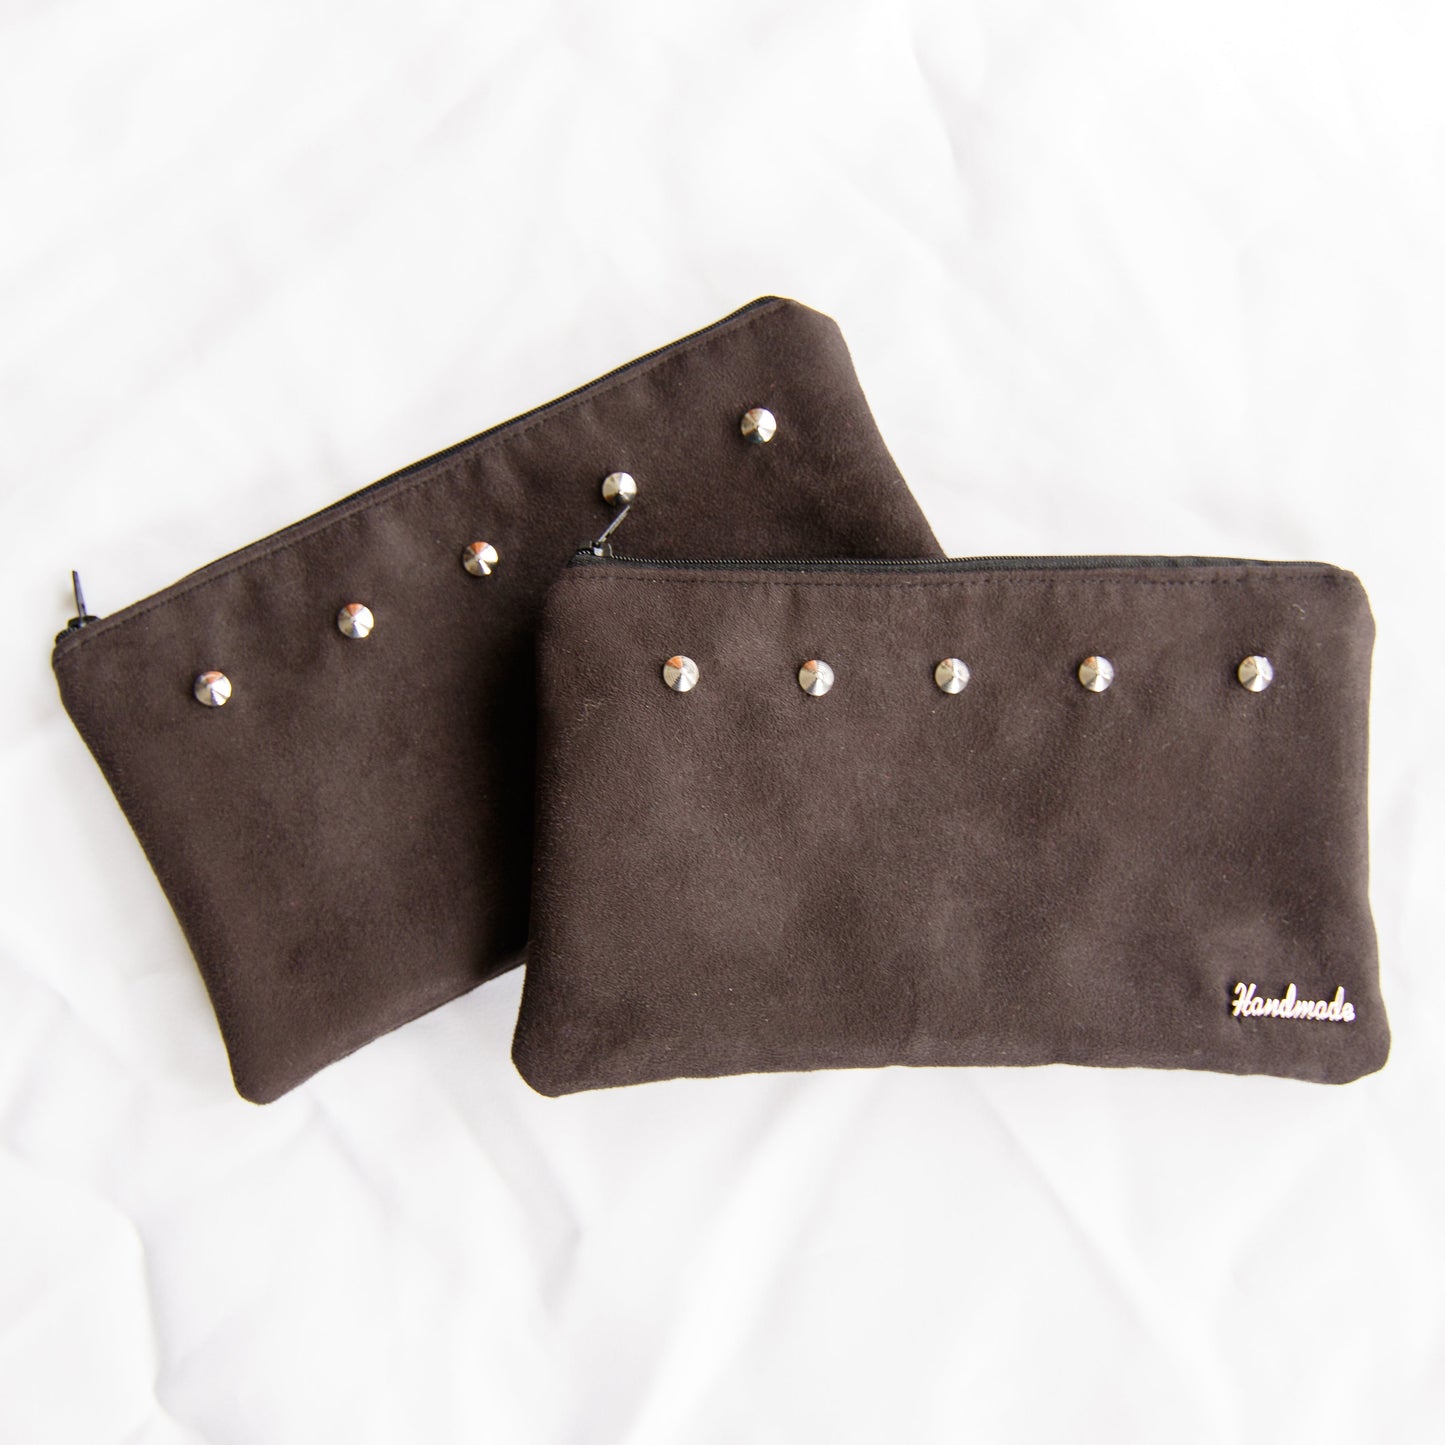 Studded Brown Suede Clutch Purse - Claymore NZ - Handbags